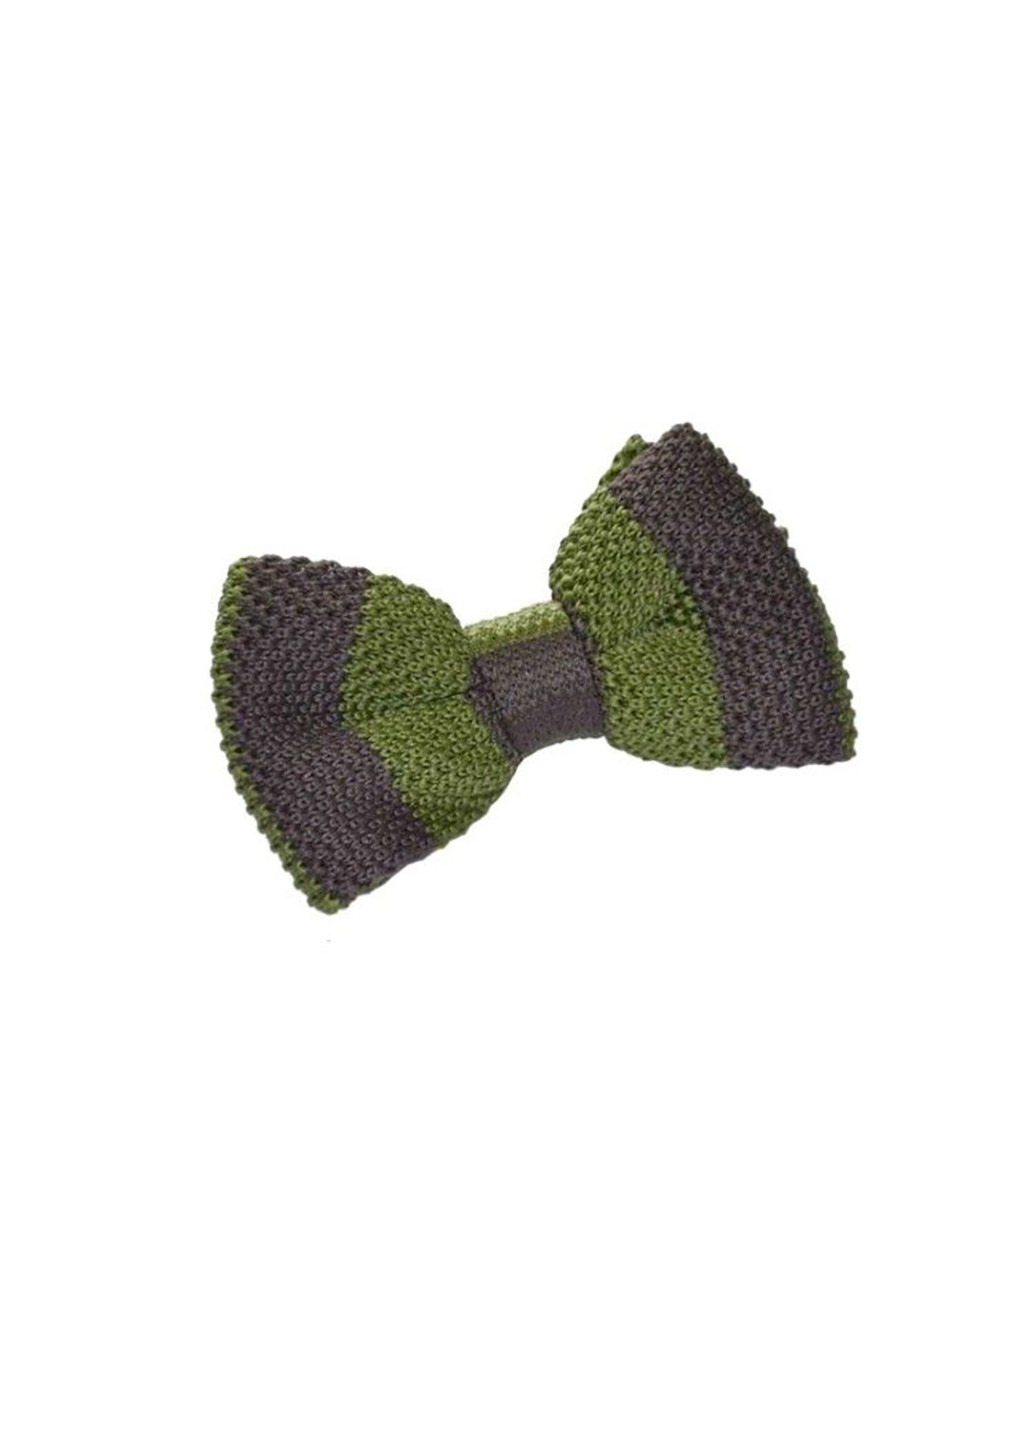 Мужской галстук бабочка 11 см Handmade (252133937)